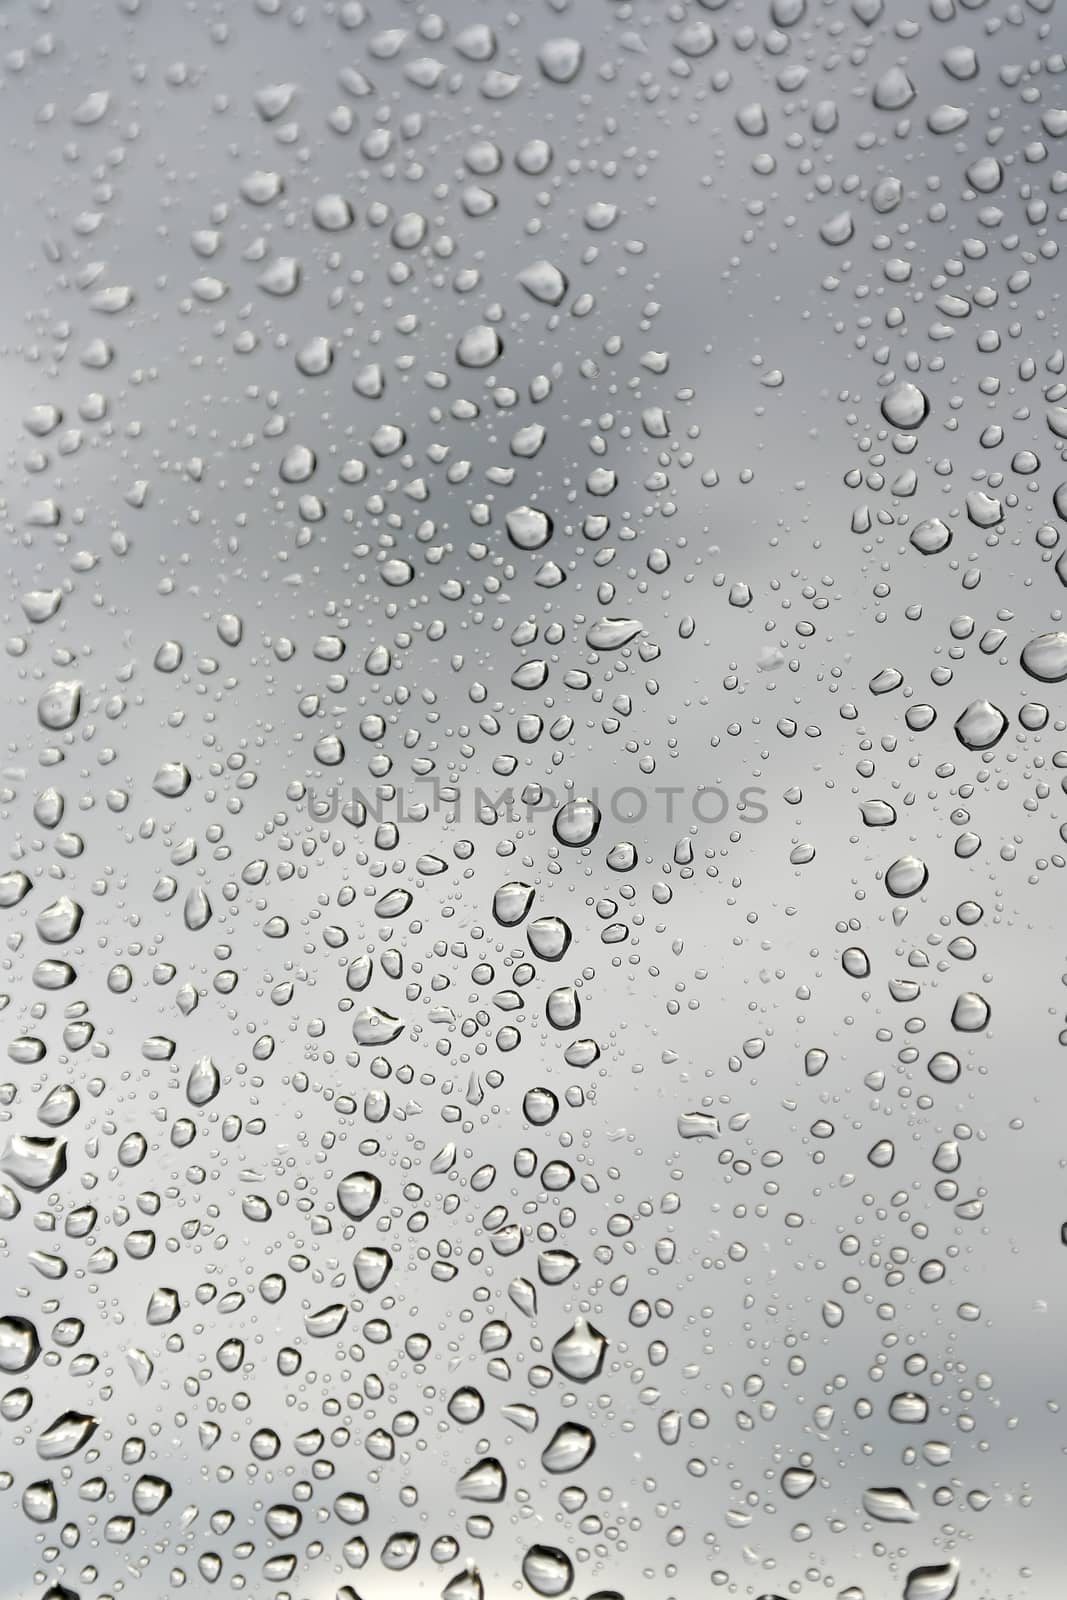 Drops of rain on the window. Shallow DOF.